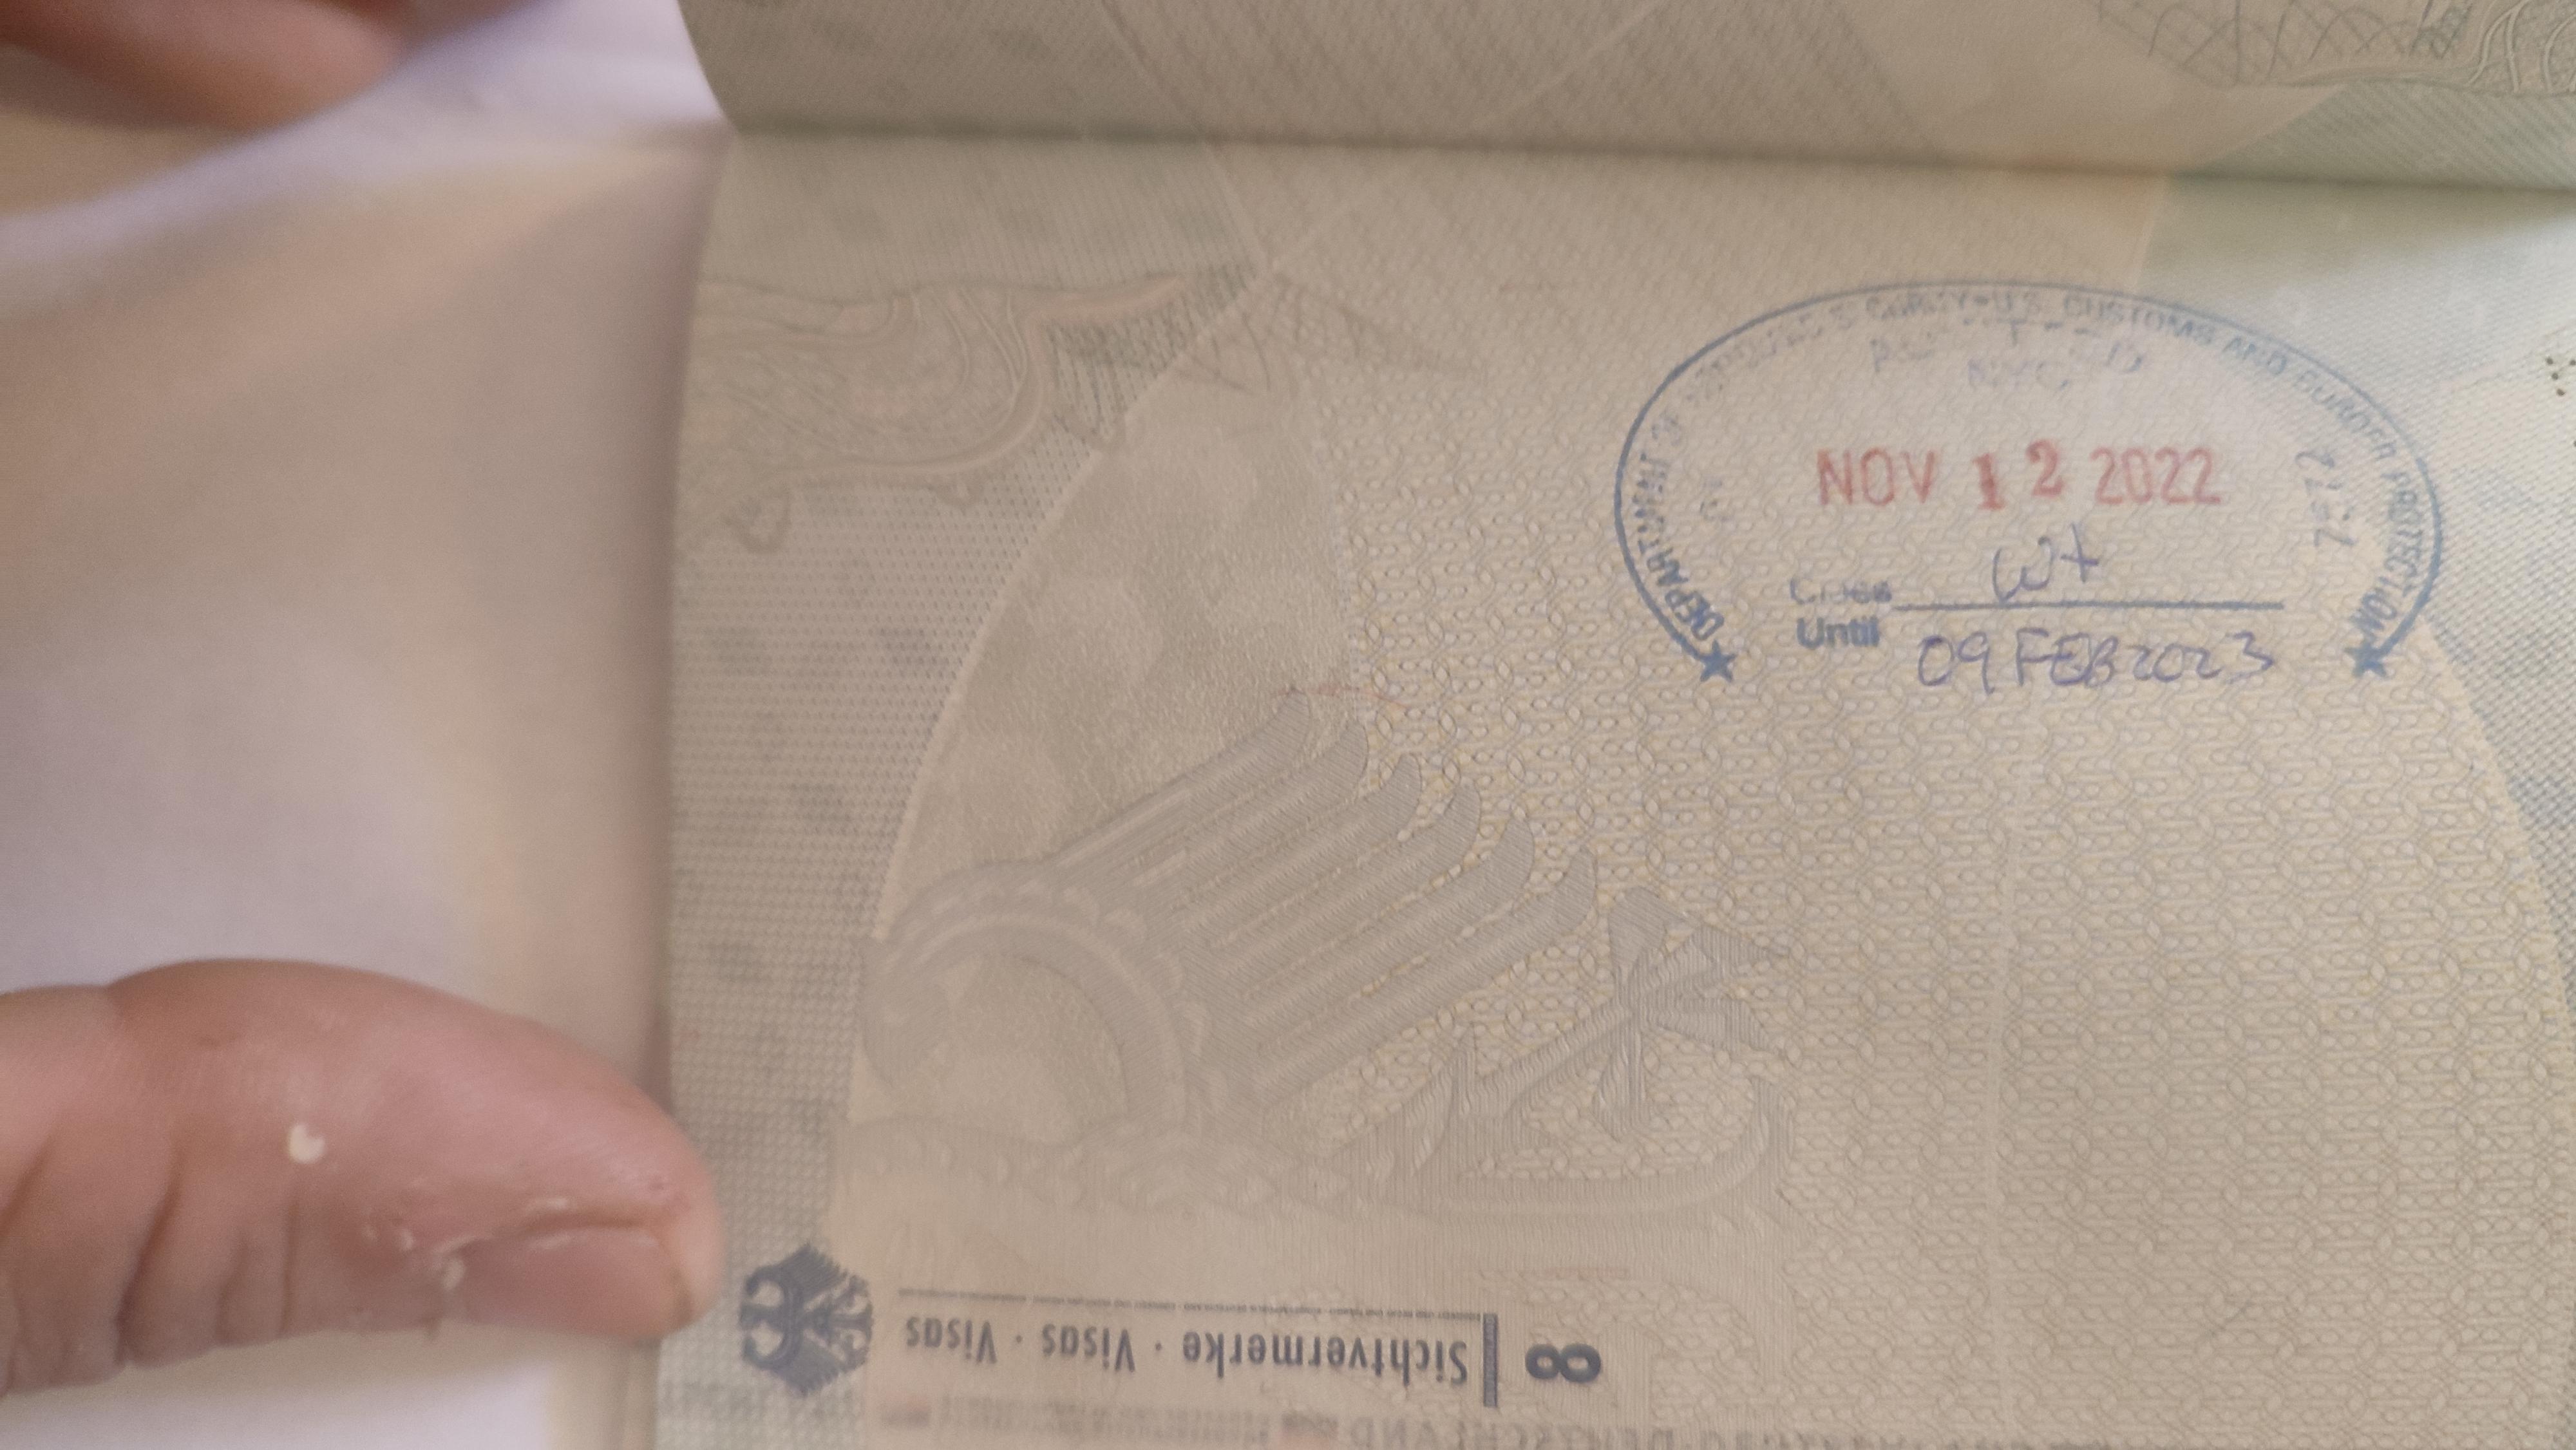 germany passport stamp